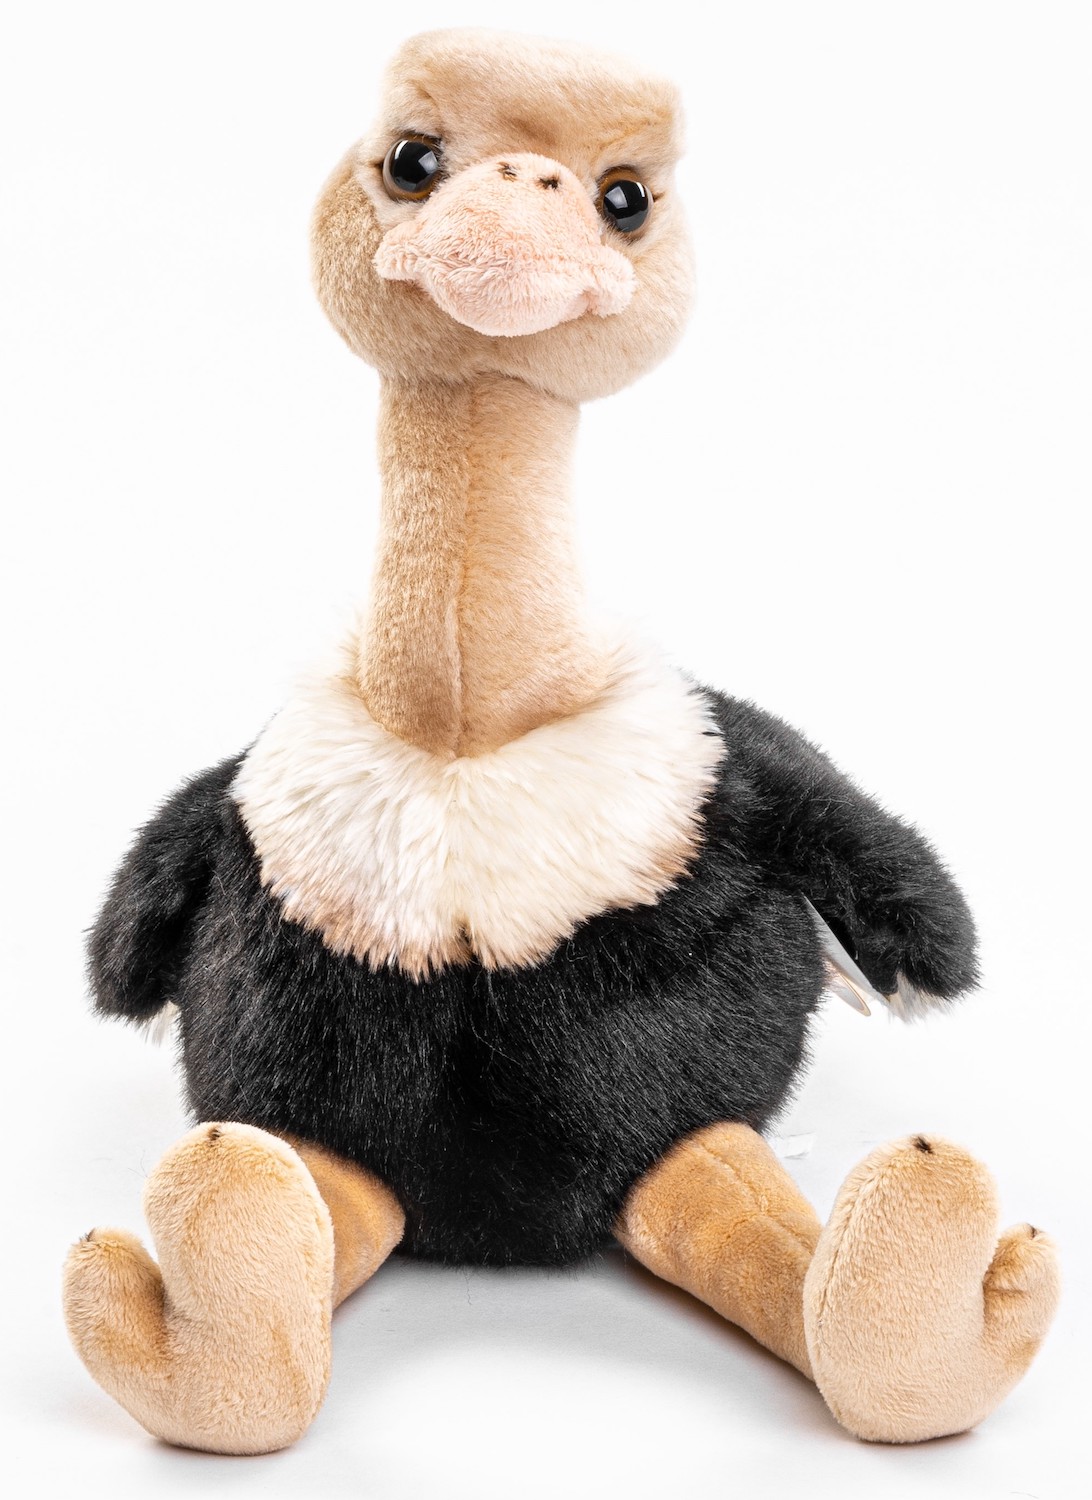 Ostrich - 28 cm (height) - Bird - Stuffed Animal, Plush Toy